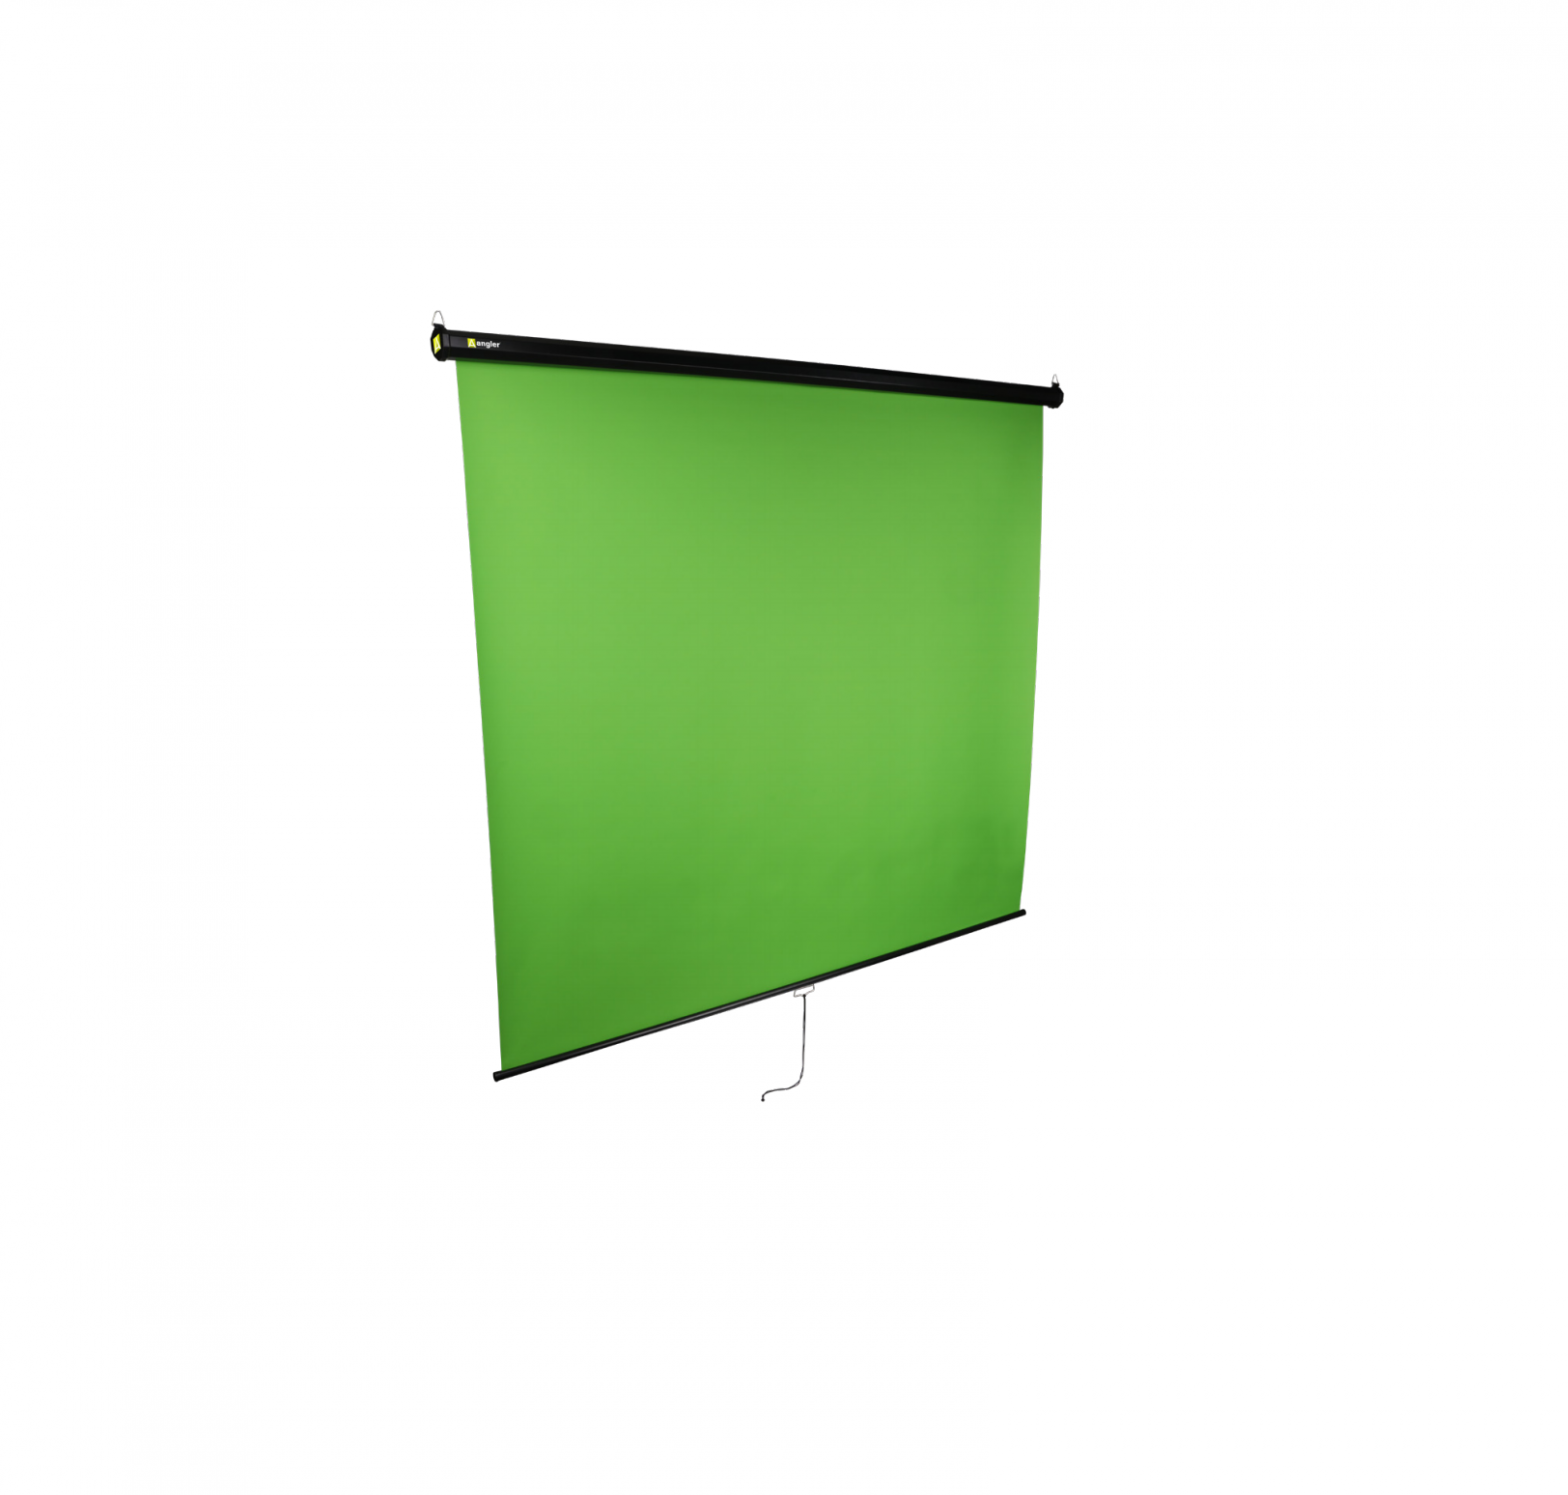 angler Retractable Green Screen Instruction Manual